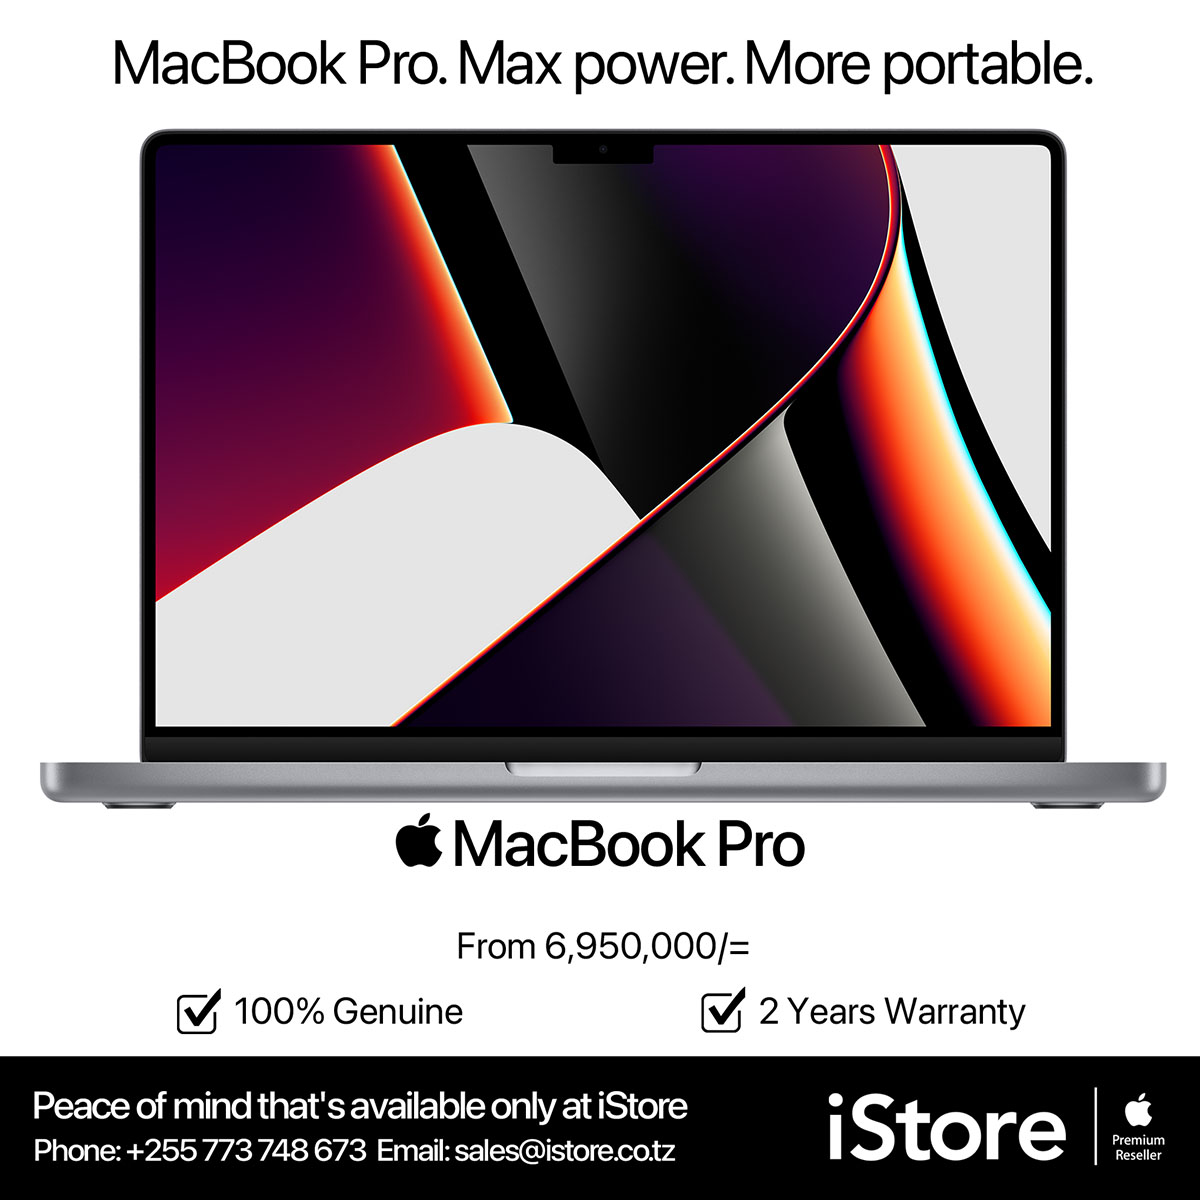 iStore-MacBook-Pro-Max-power-more-portable